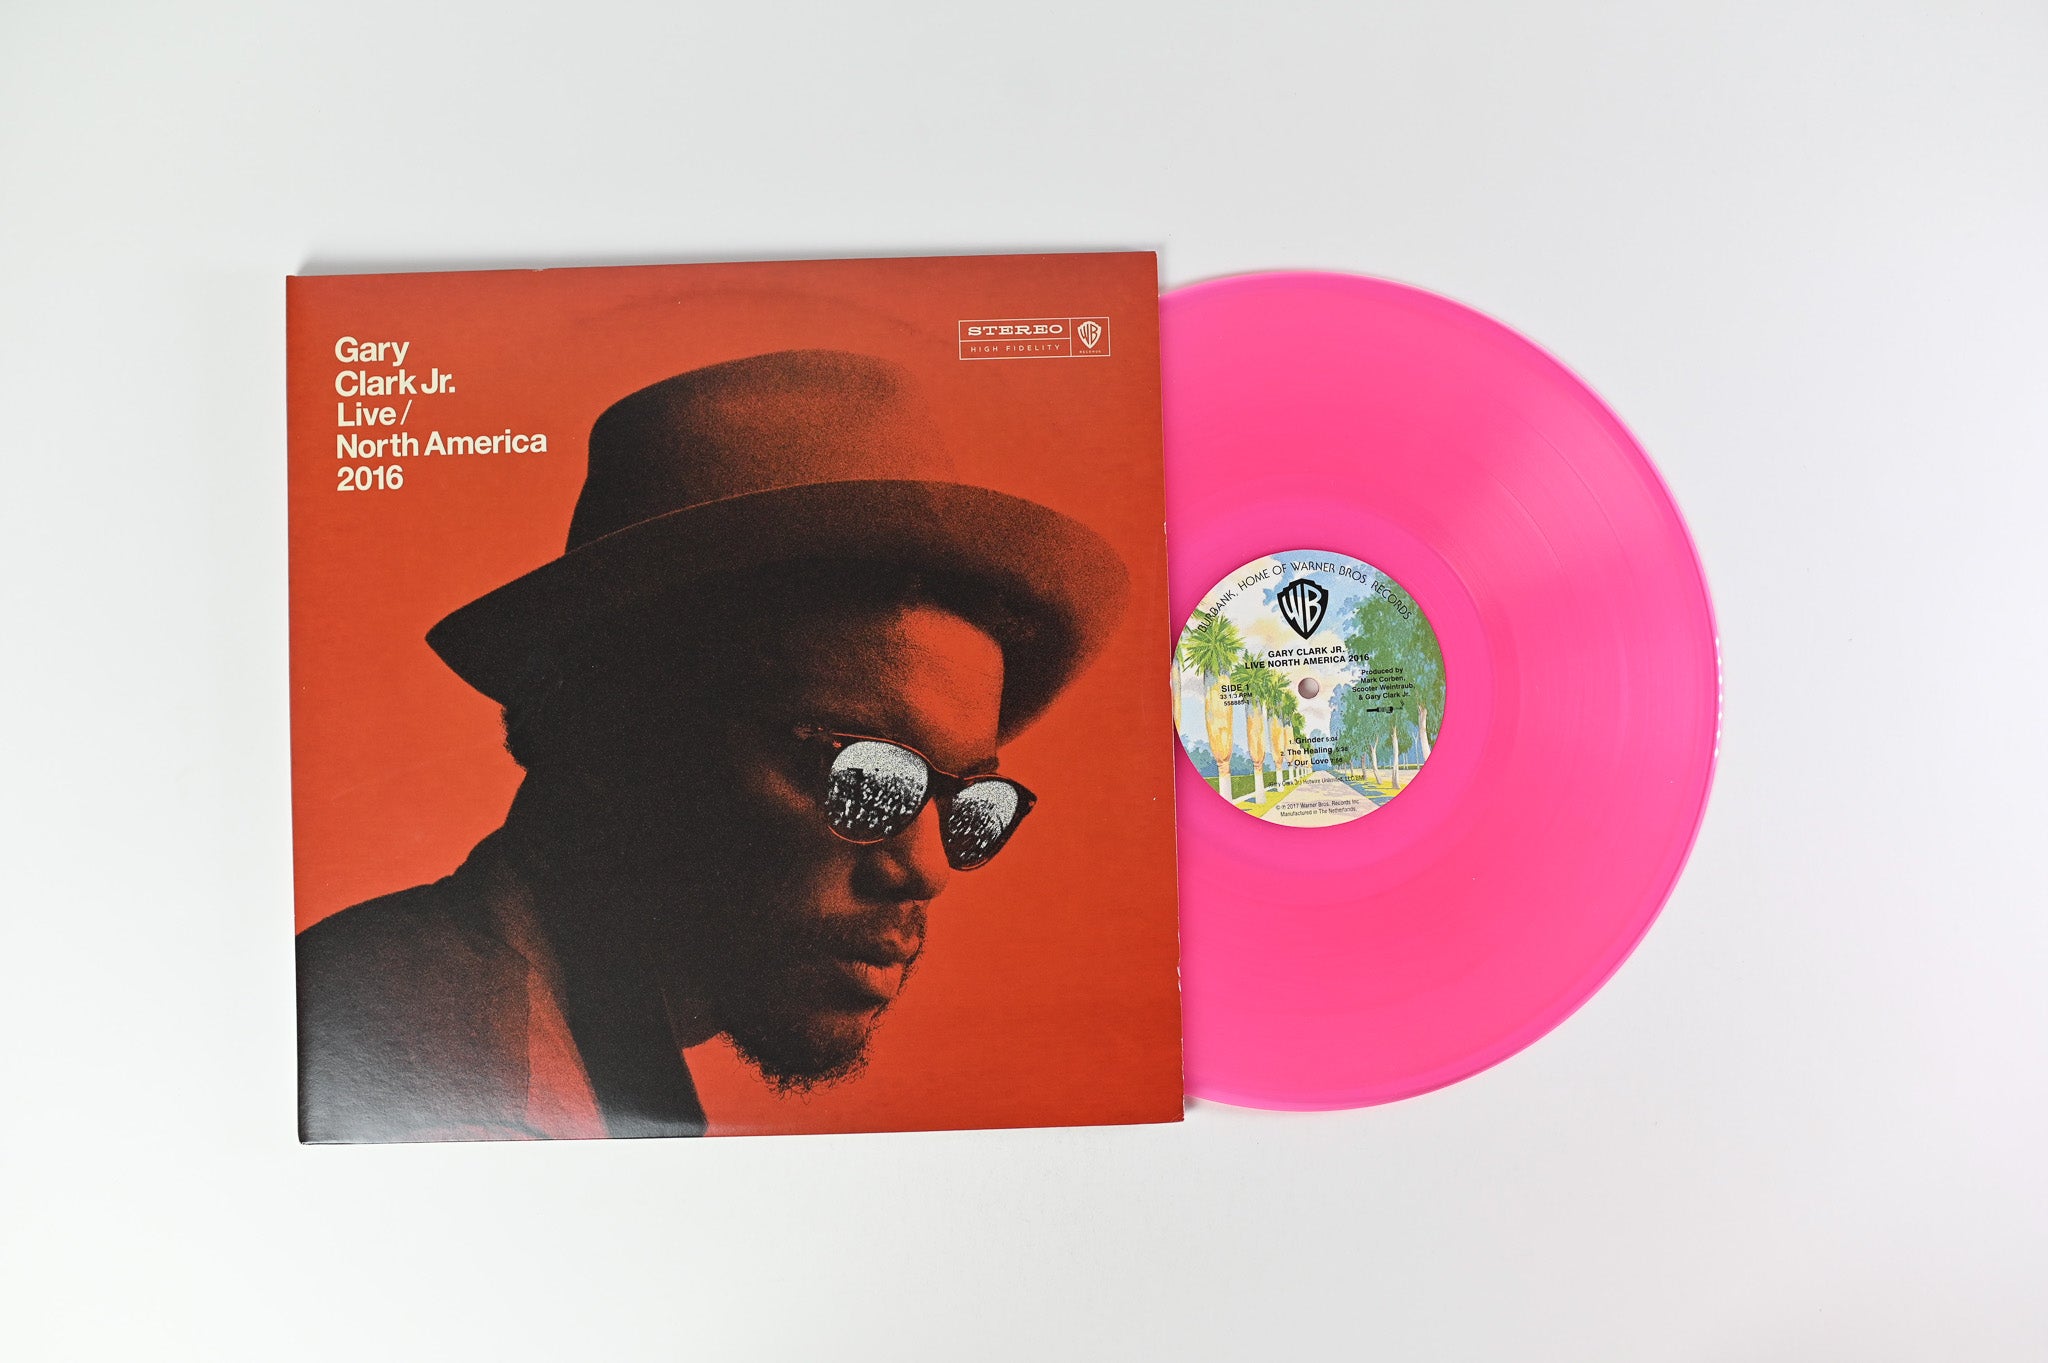 Gary Clark Jr. - Live / North America 2016 on Warner Bros. Records Pink Vinyl